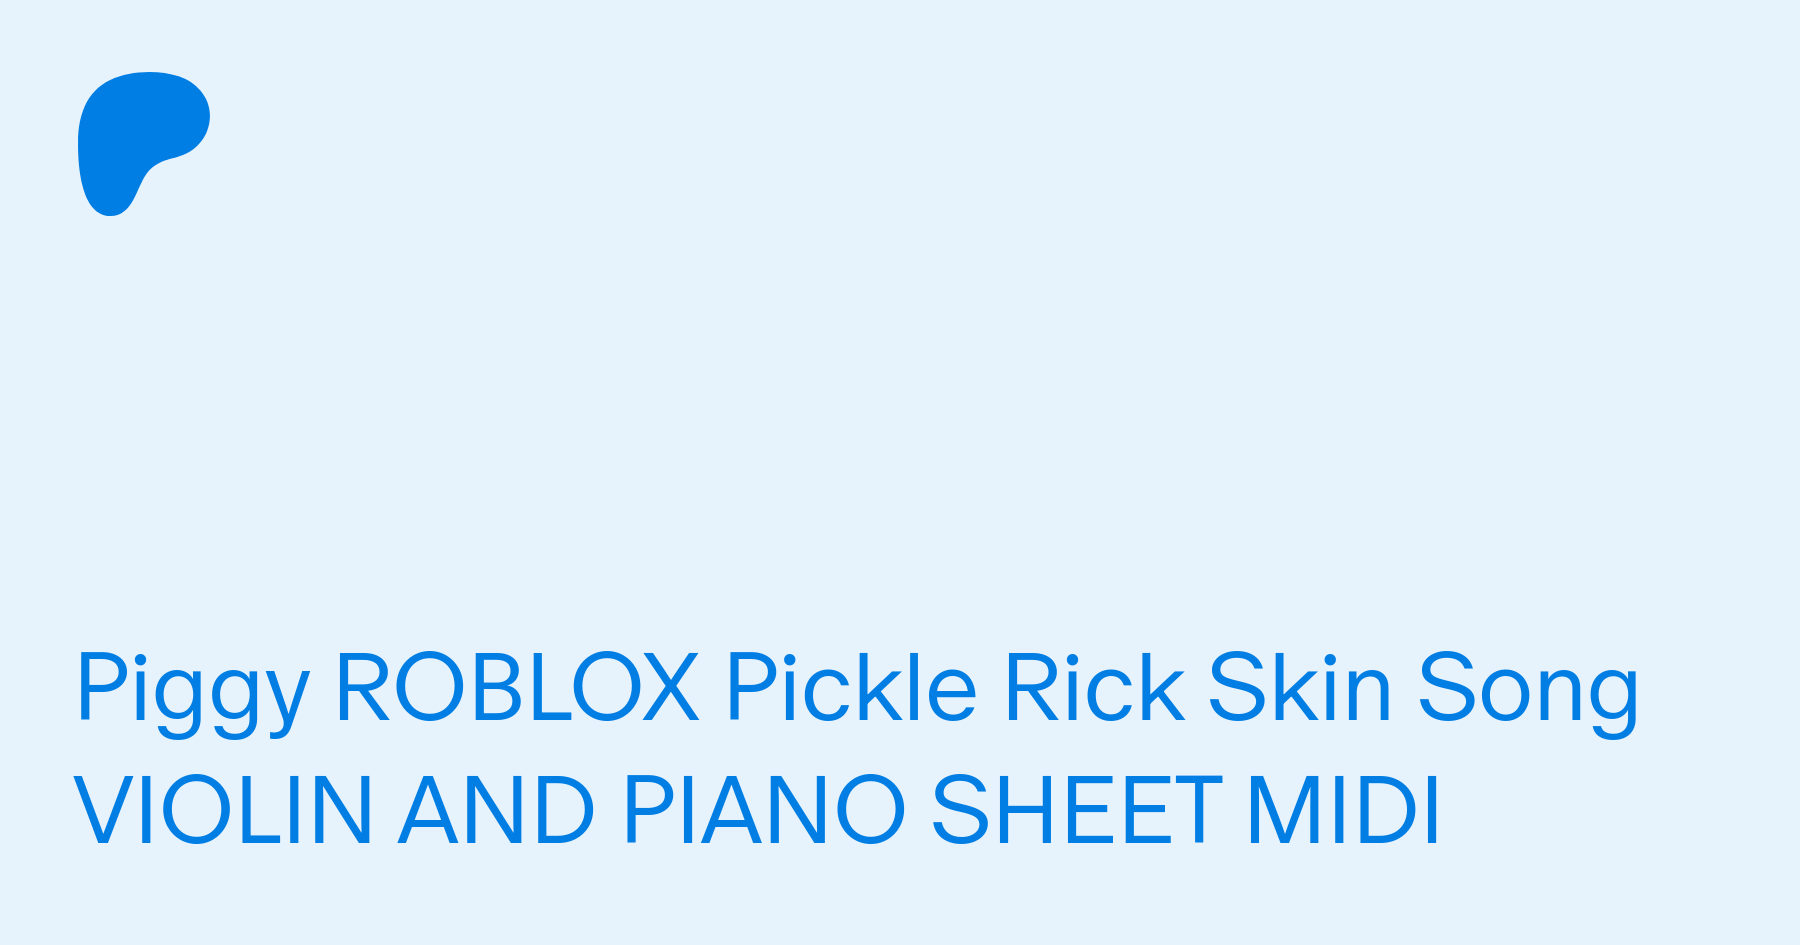 Piggy Roblox Pickle Rick Skin Song Violin And Piano Sheet Midi Musicbyby On Patreon - midi roblox